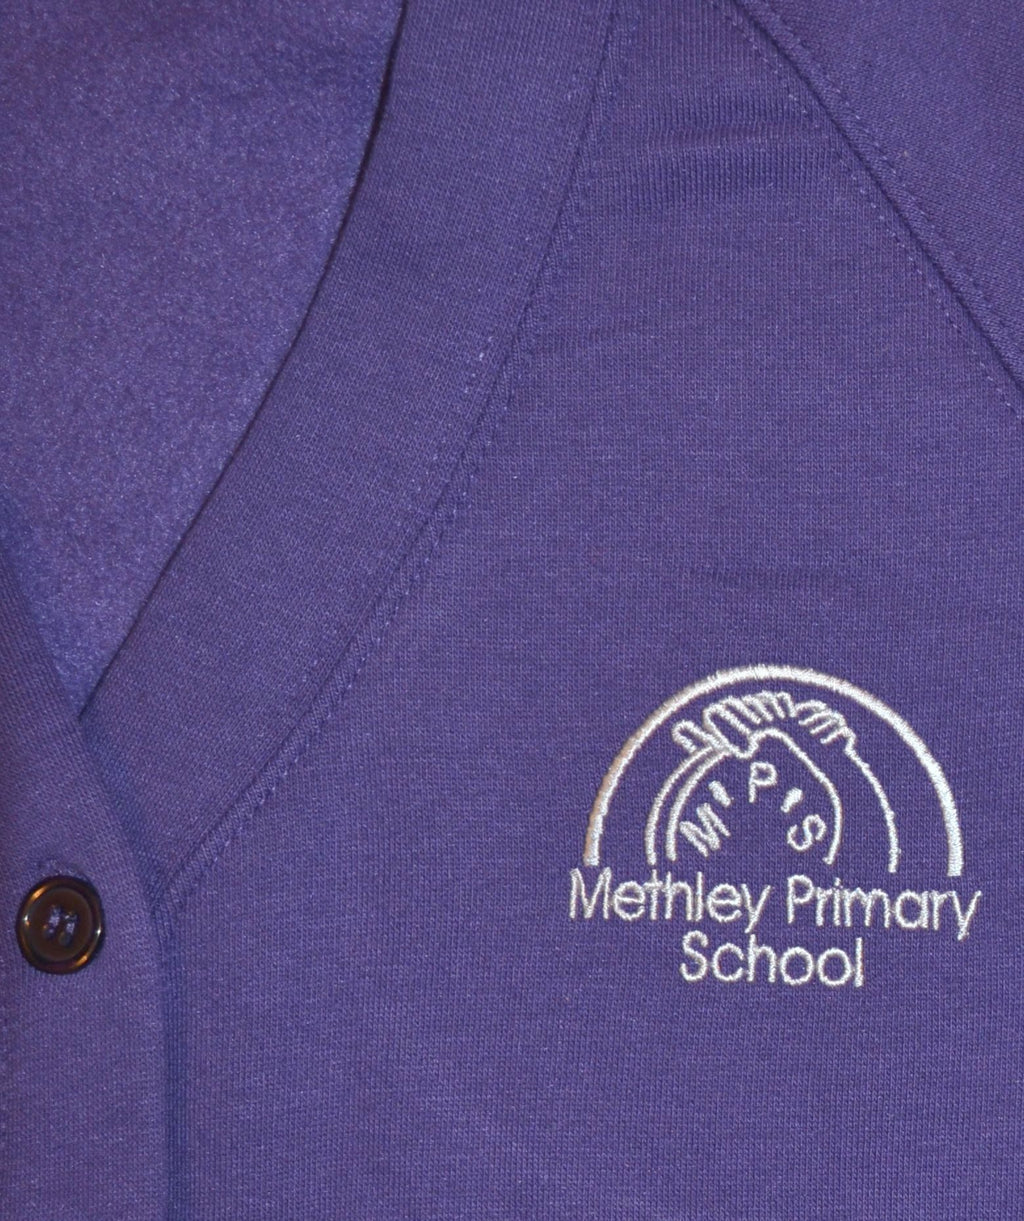 Methley Primary School Purple Cardigan